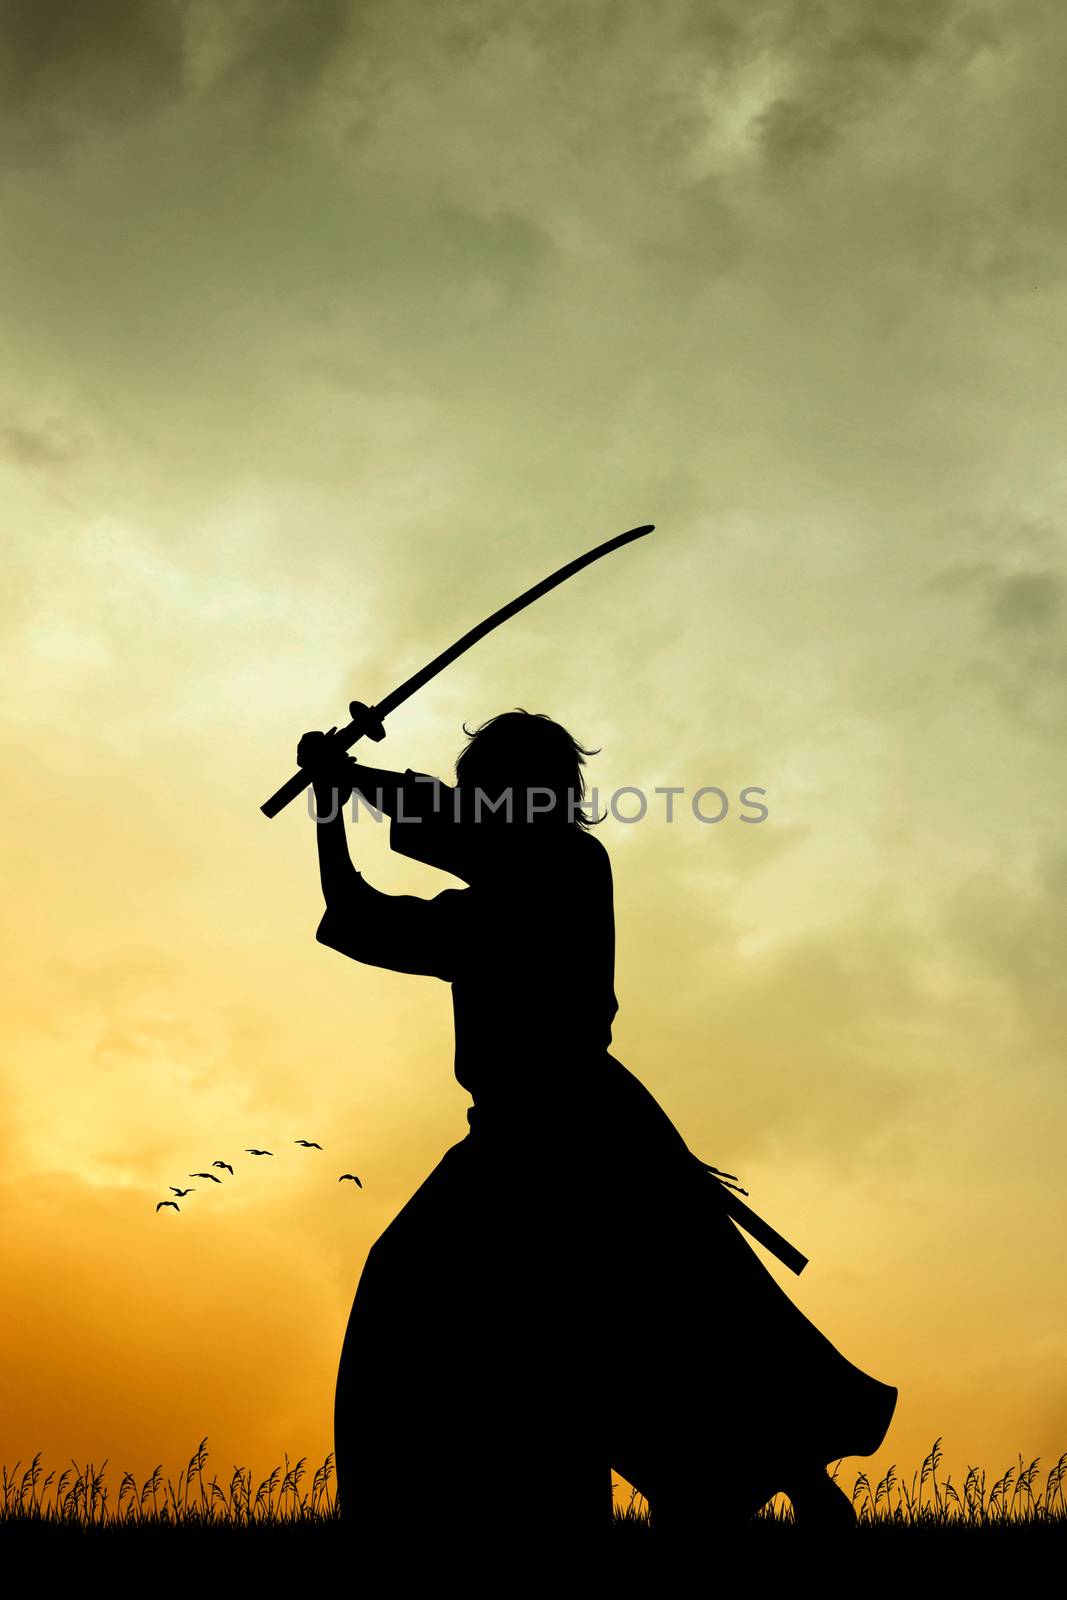 Samurai at sunset by adrenalina